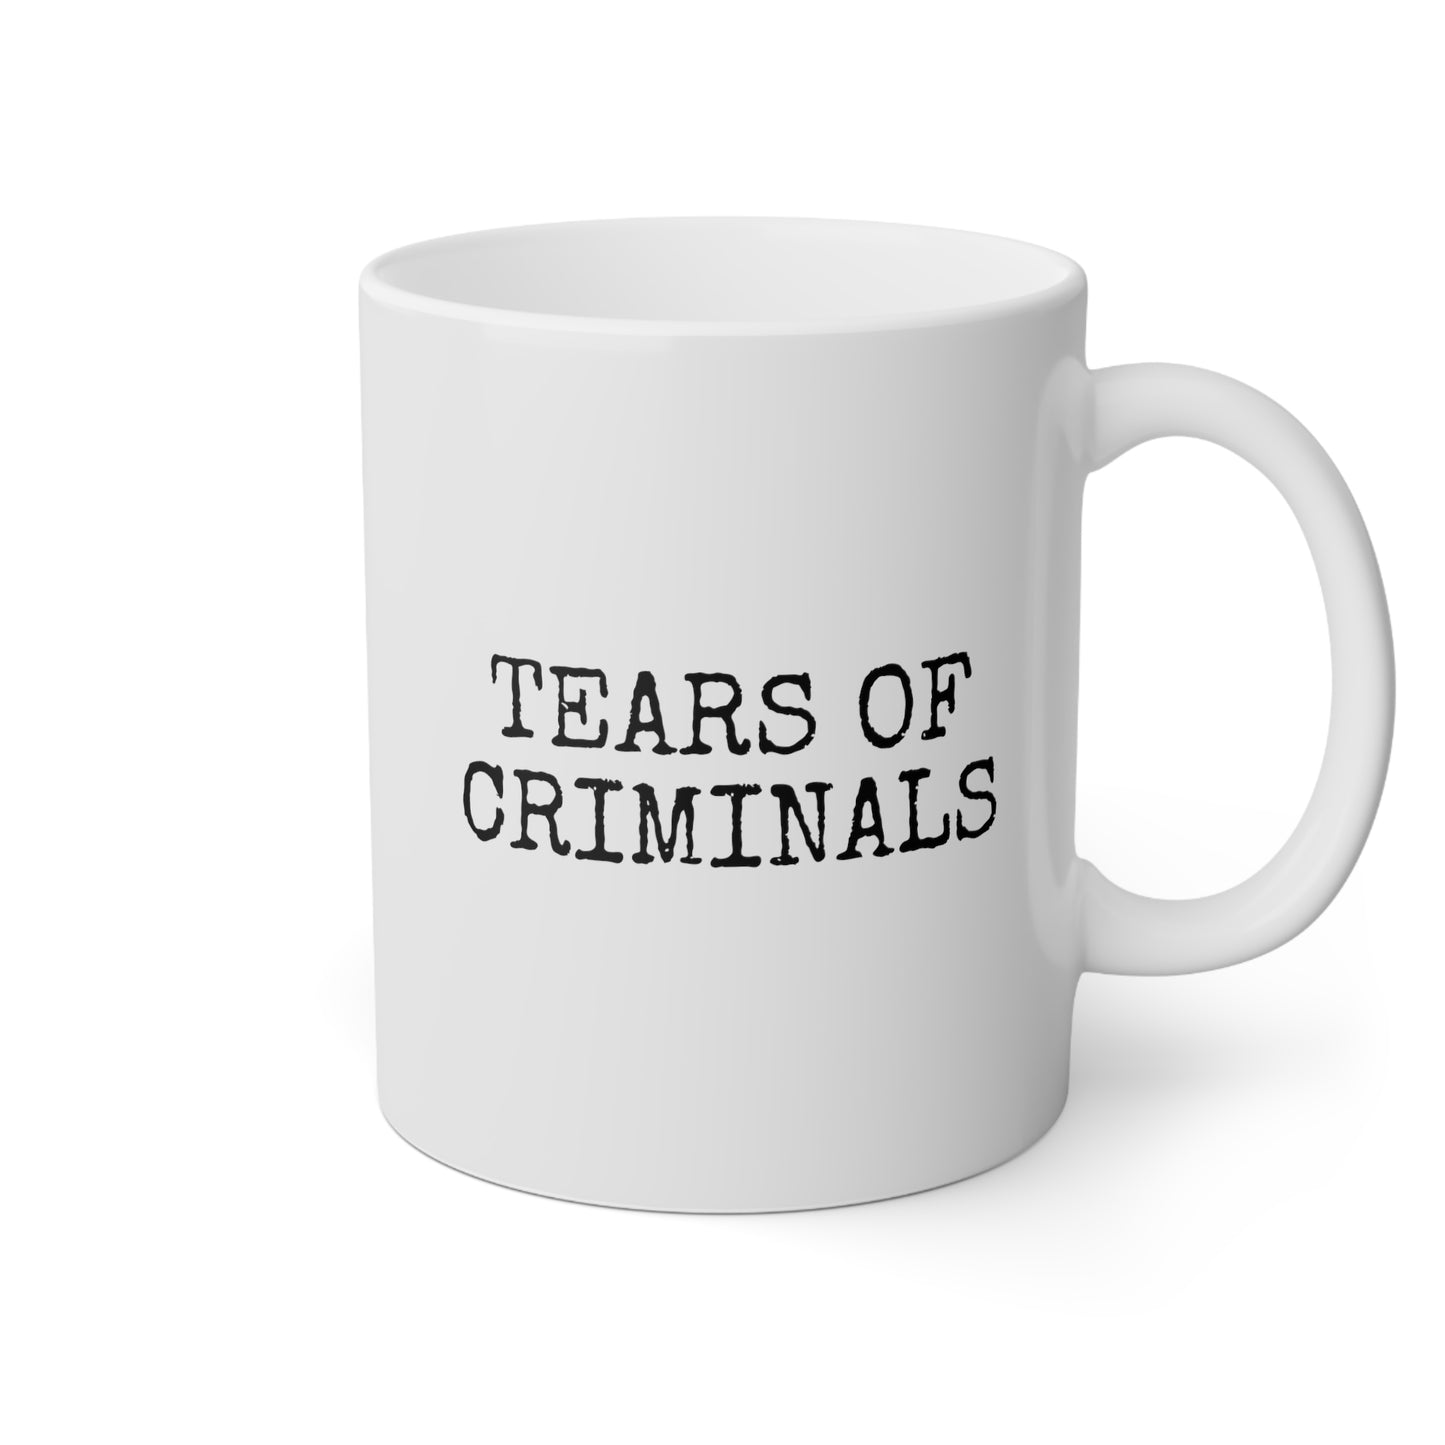 Tears of Criminals 11oz white funny large coffee mug gift for police officer cop graduation grad waveywares wavey wares wavywares wavy wares